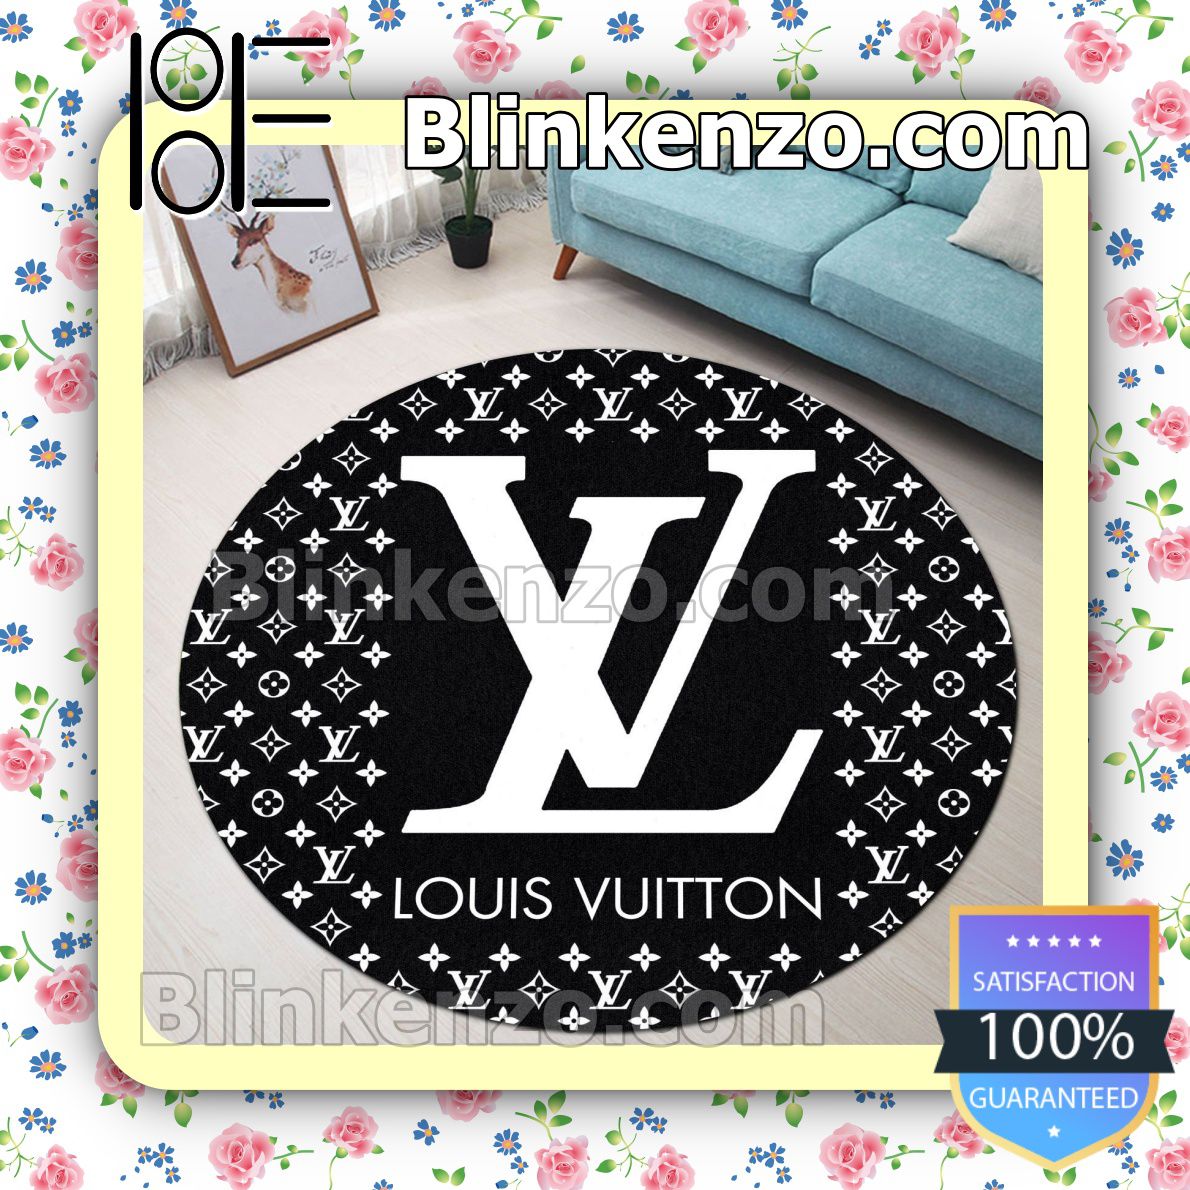 Louis Vuitton Monogram With White Big Logo Center Black Round Carpet Runners